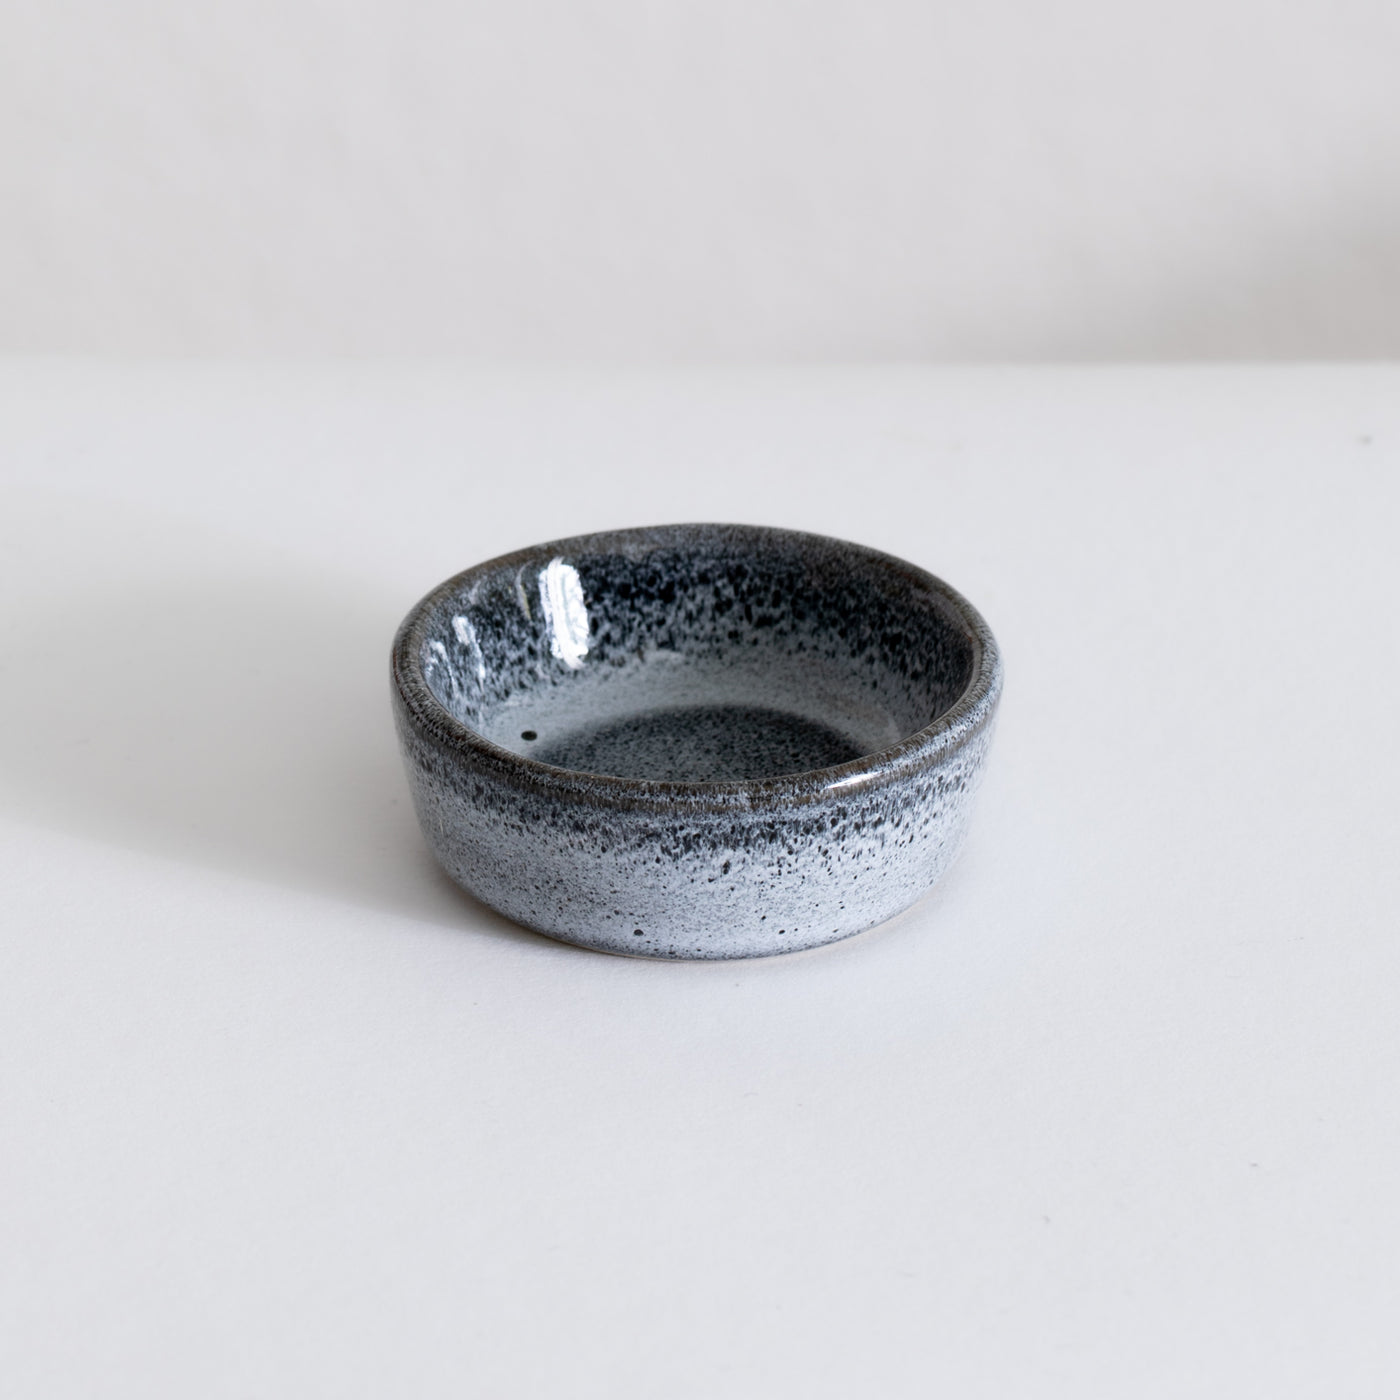 Small mini bowl stoneware for mustard, fig mustard, salt or rings